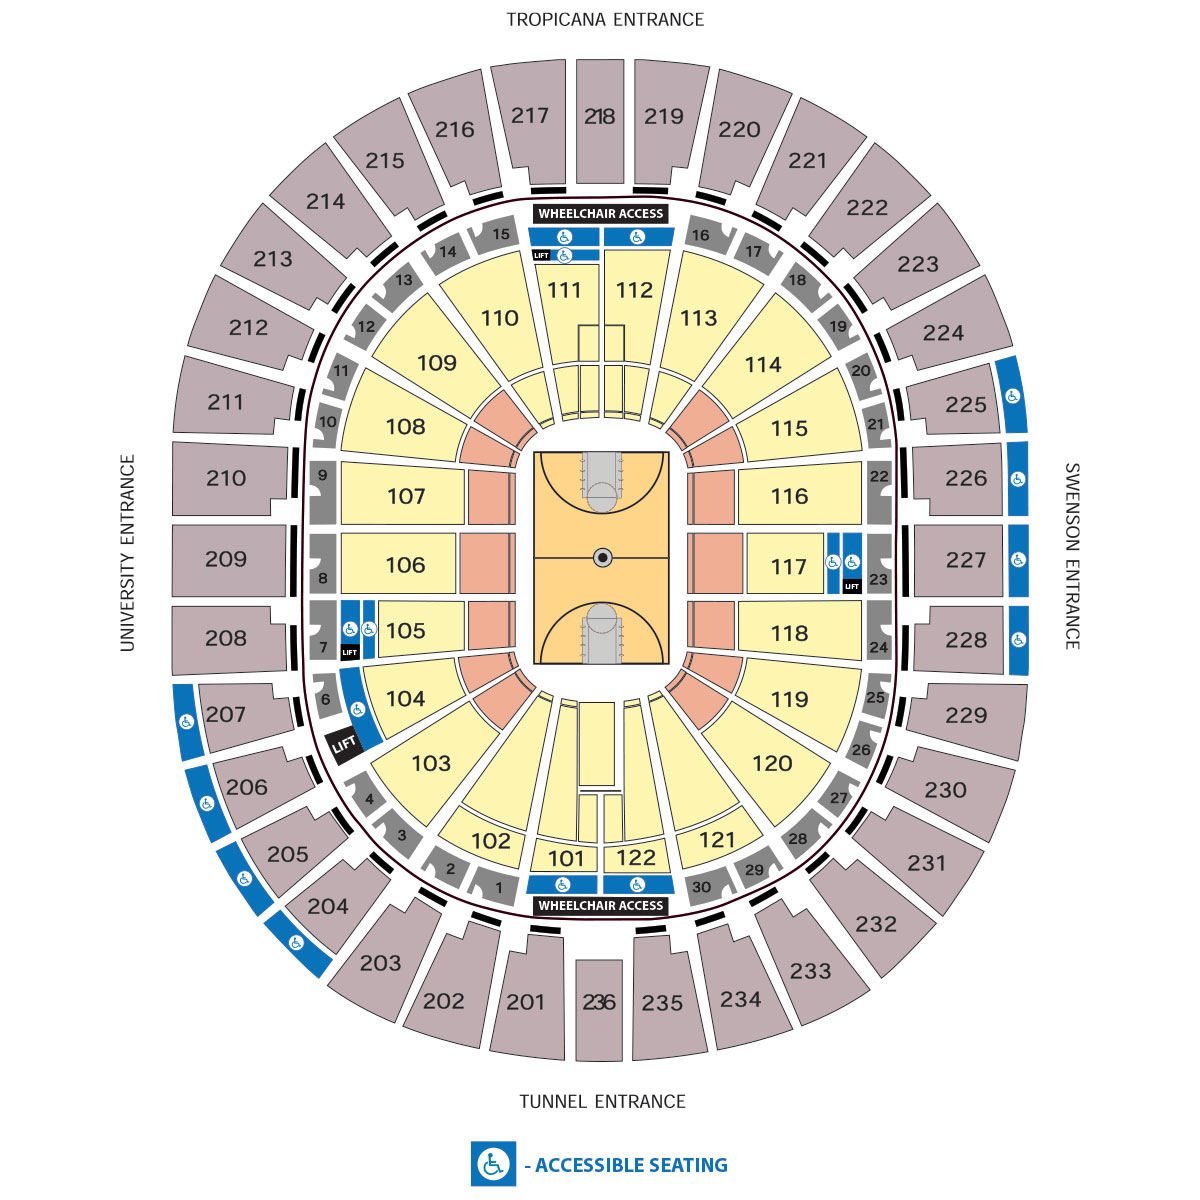 Allegiant Stadium Seating Numbers Buy Raiders Psls In Section 223 Row